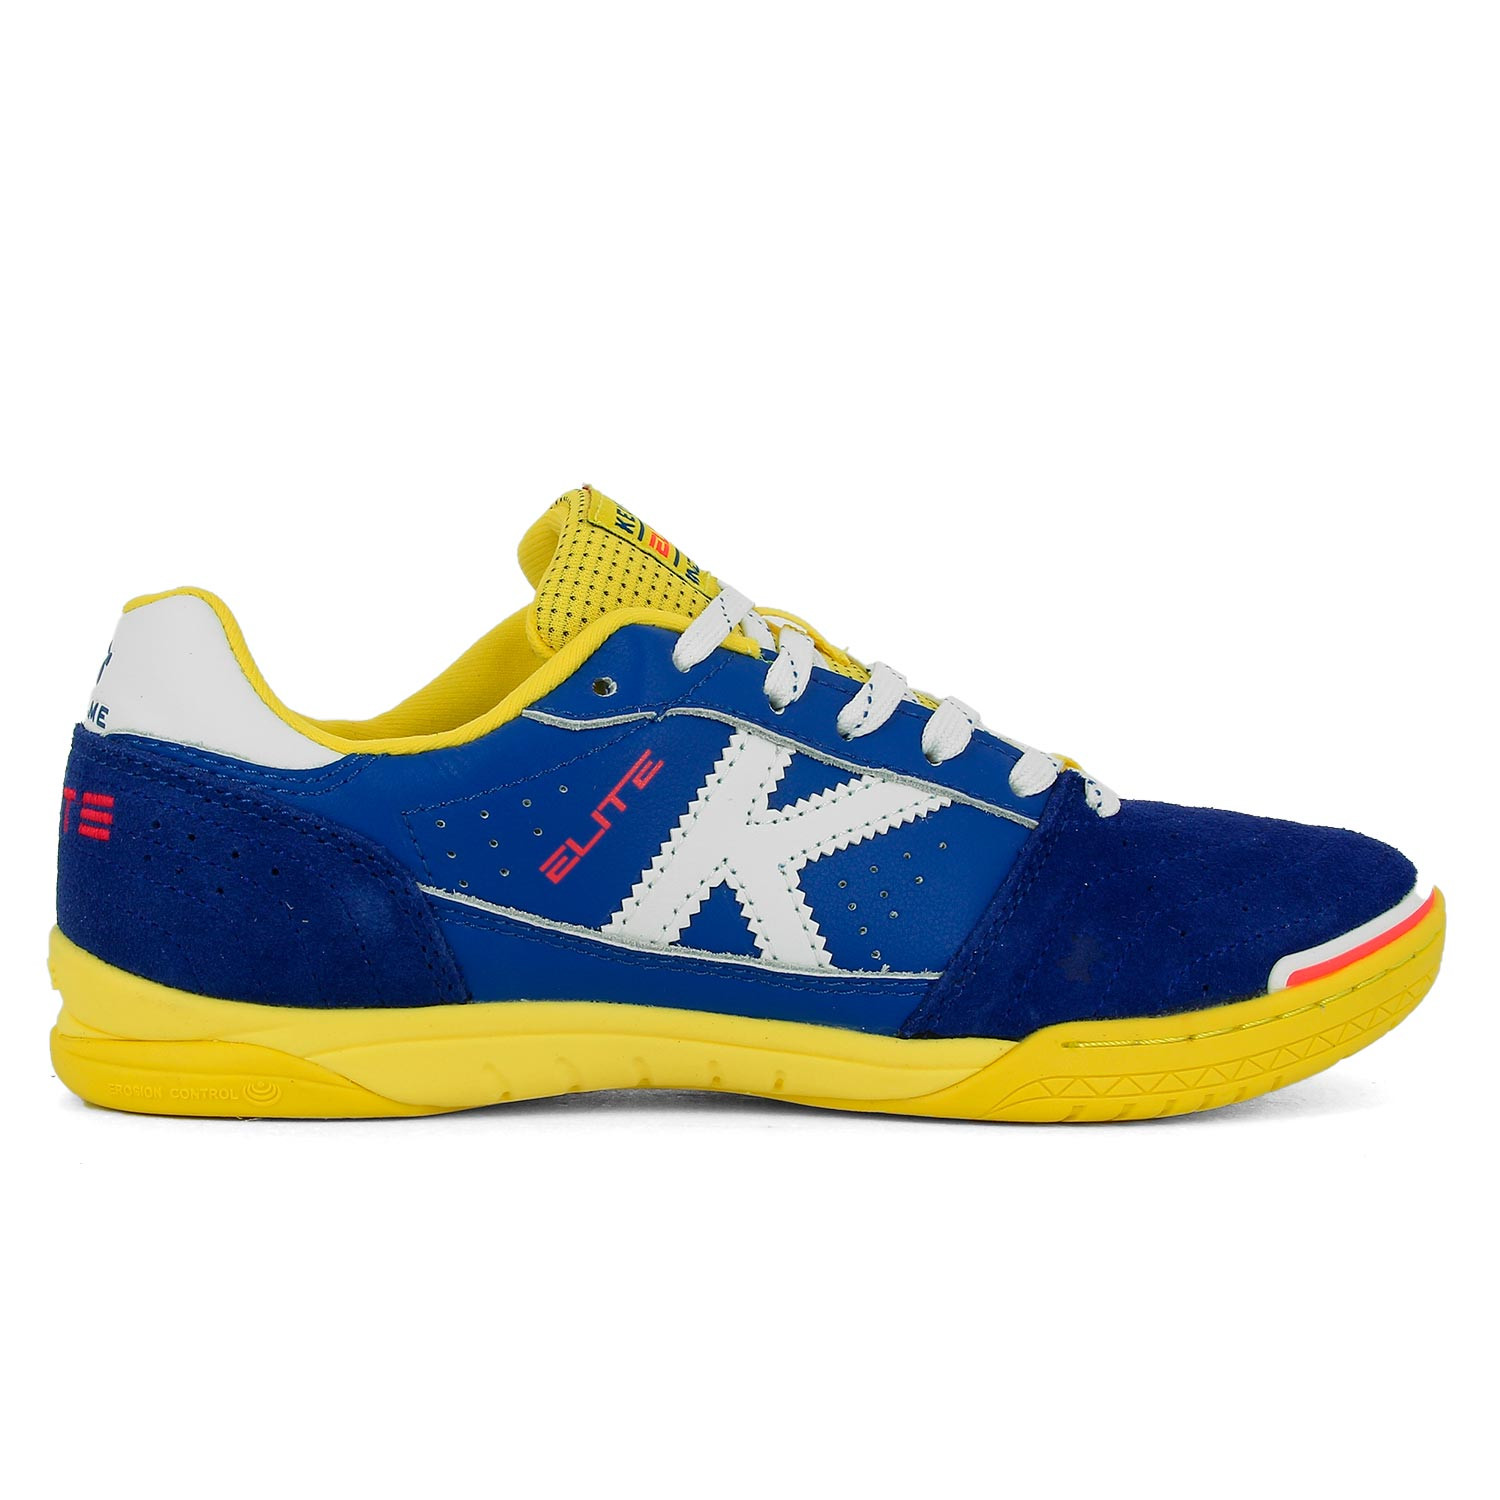 Zapatillas futsal Kelme Elite azules y amarillas futbolmania